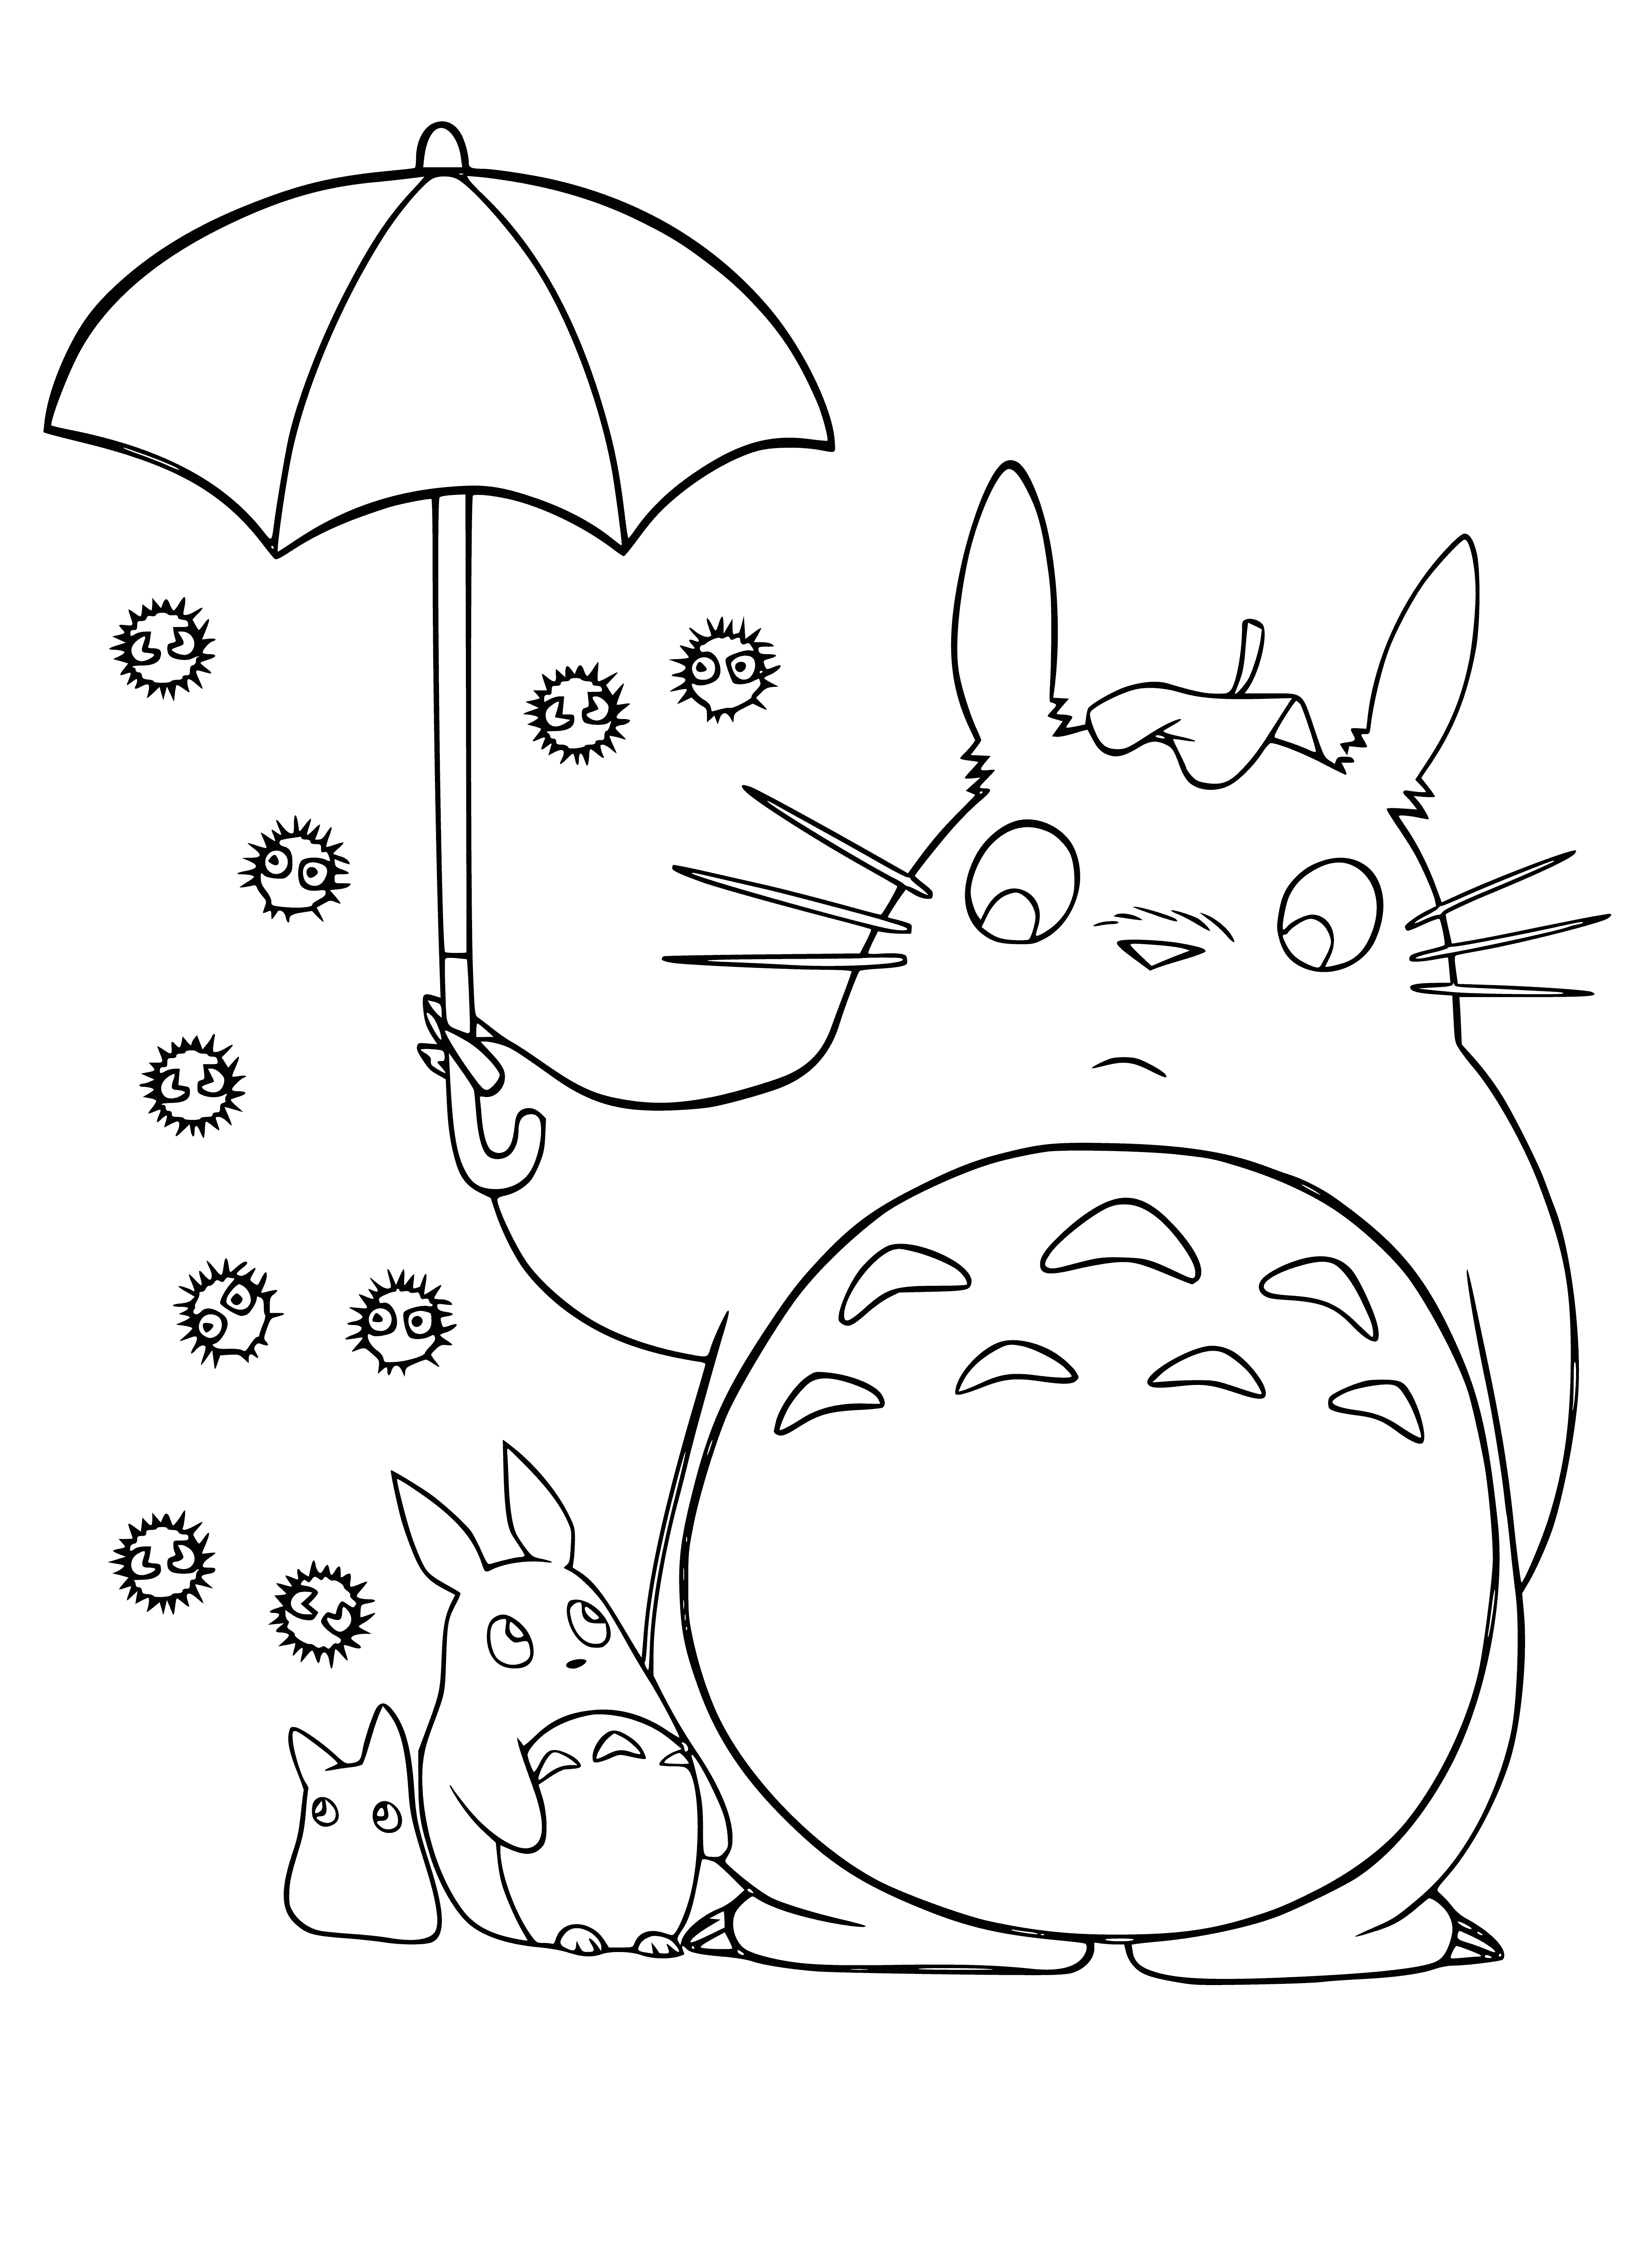 Totoro and Chernushki coloring page